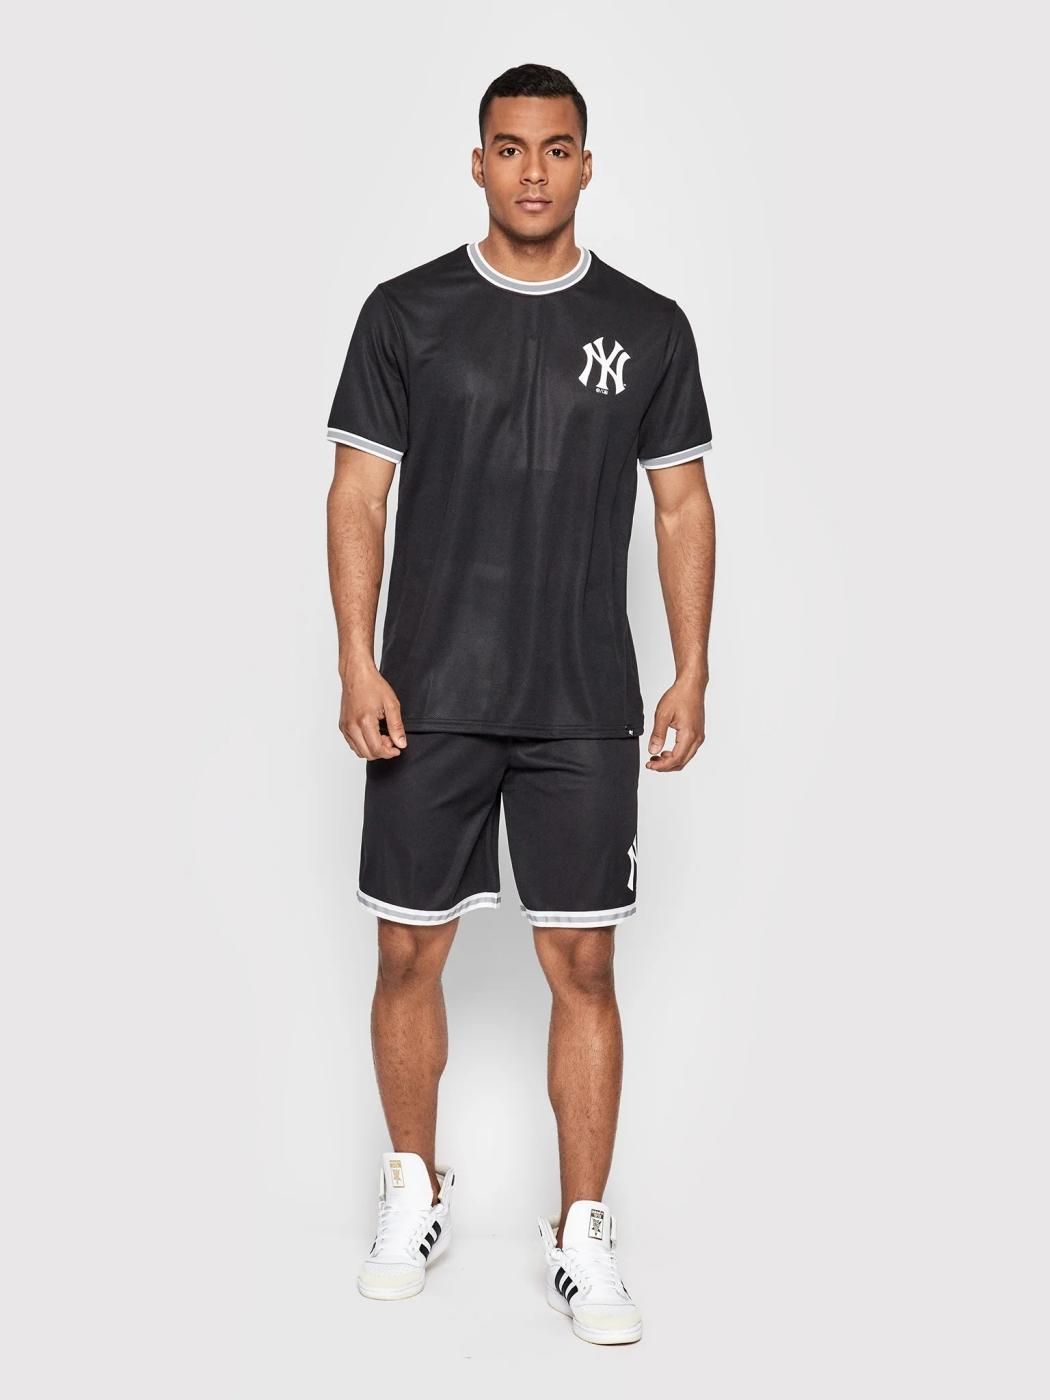 Camiseta 47 Brand Grafton New York Yankees